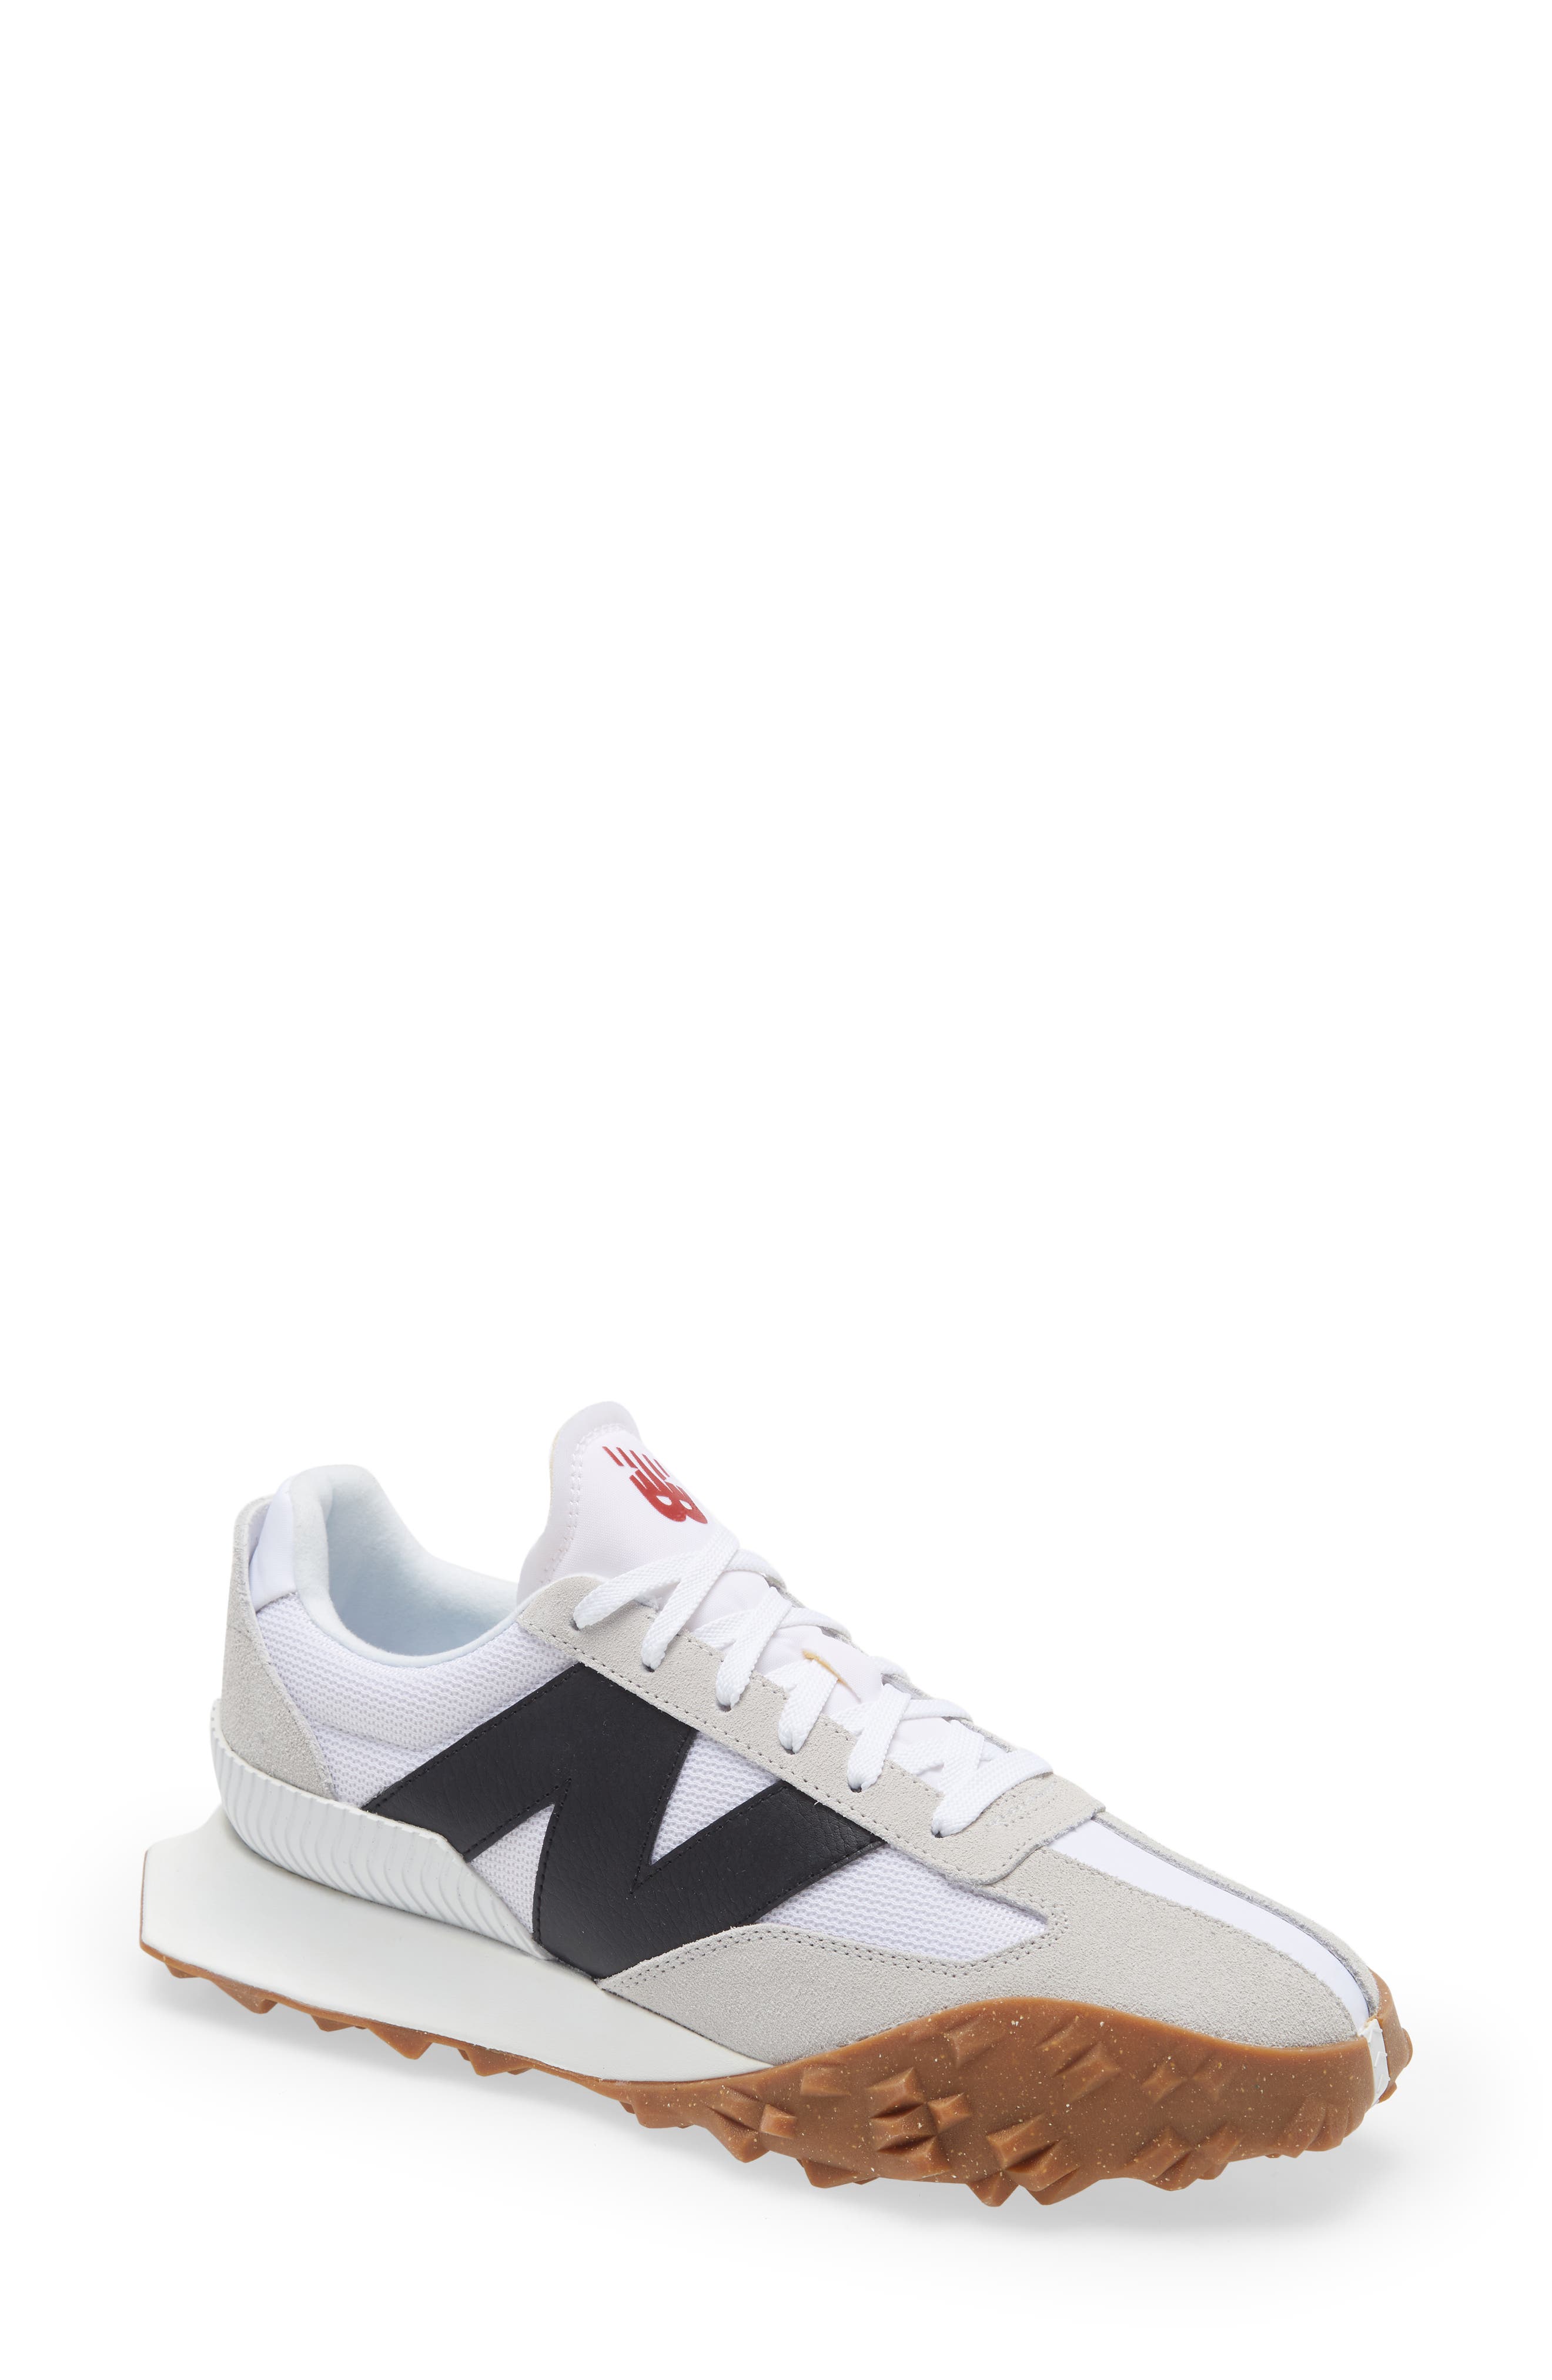 New Balance XC72 Sneaker in White/Black